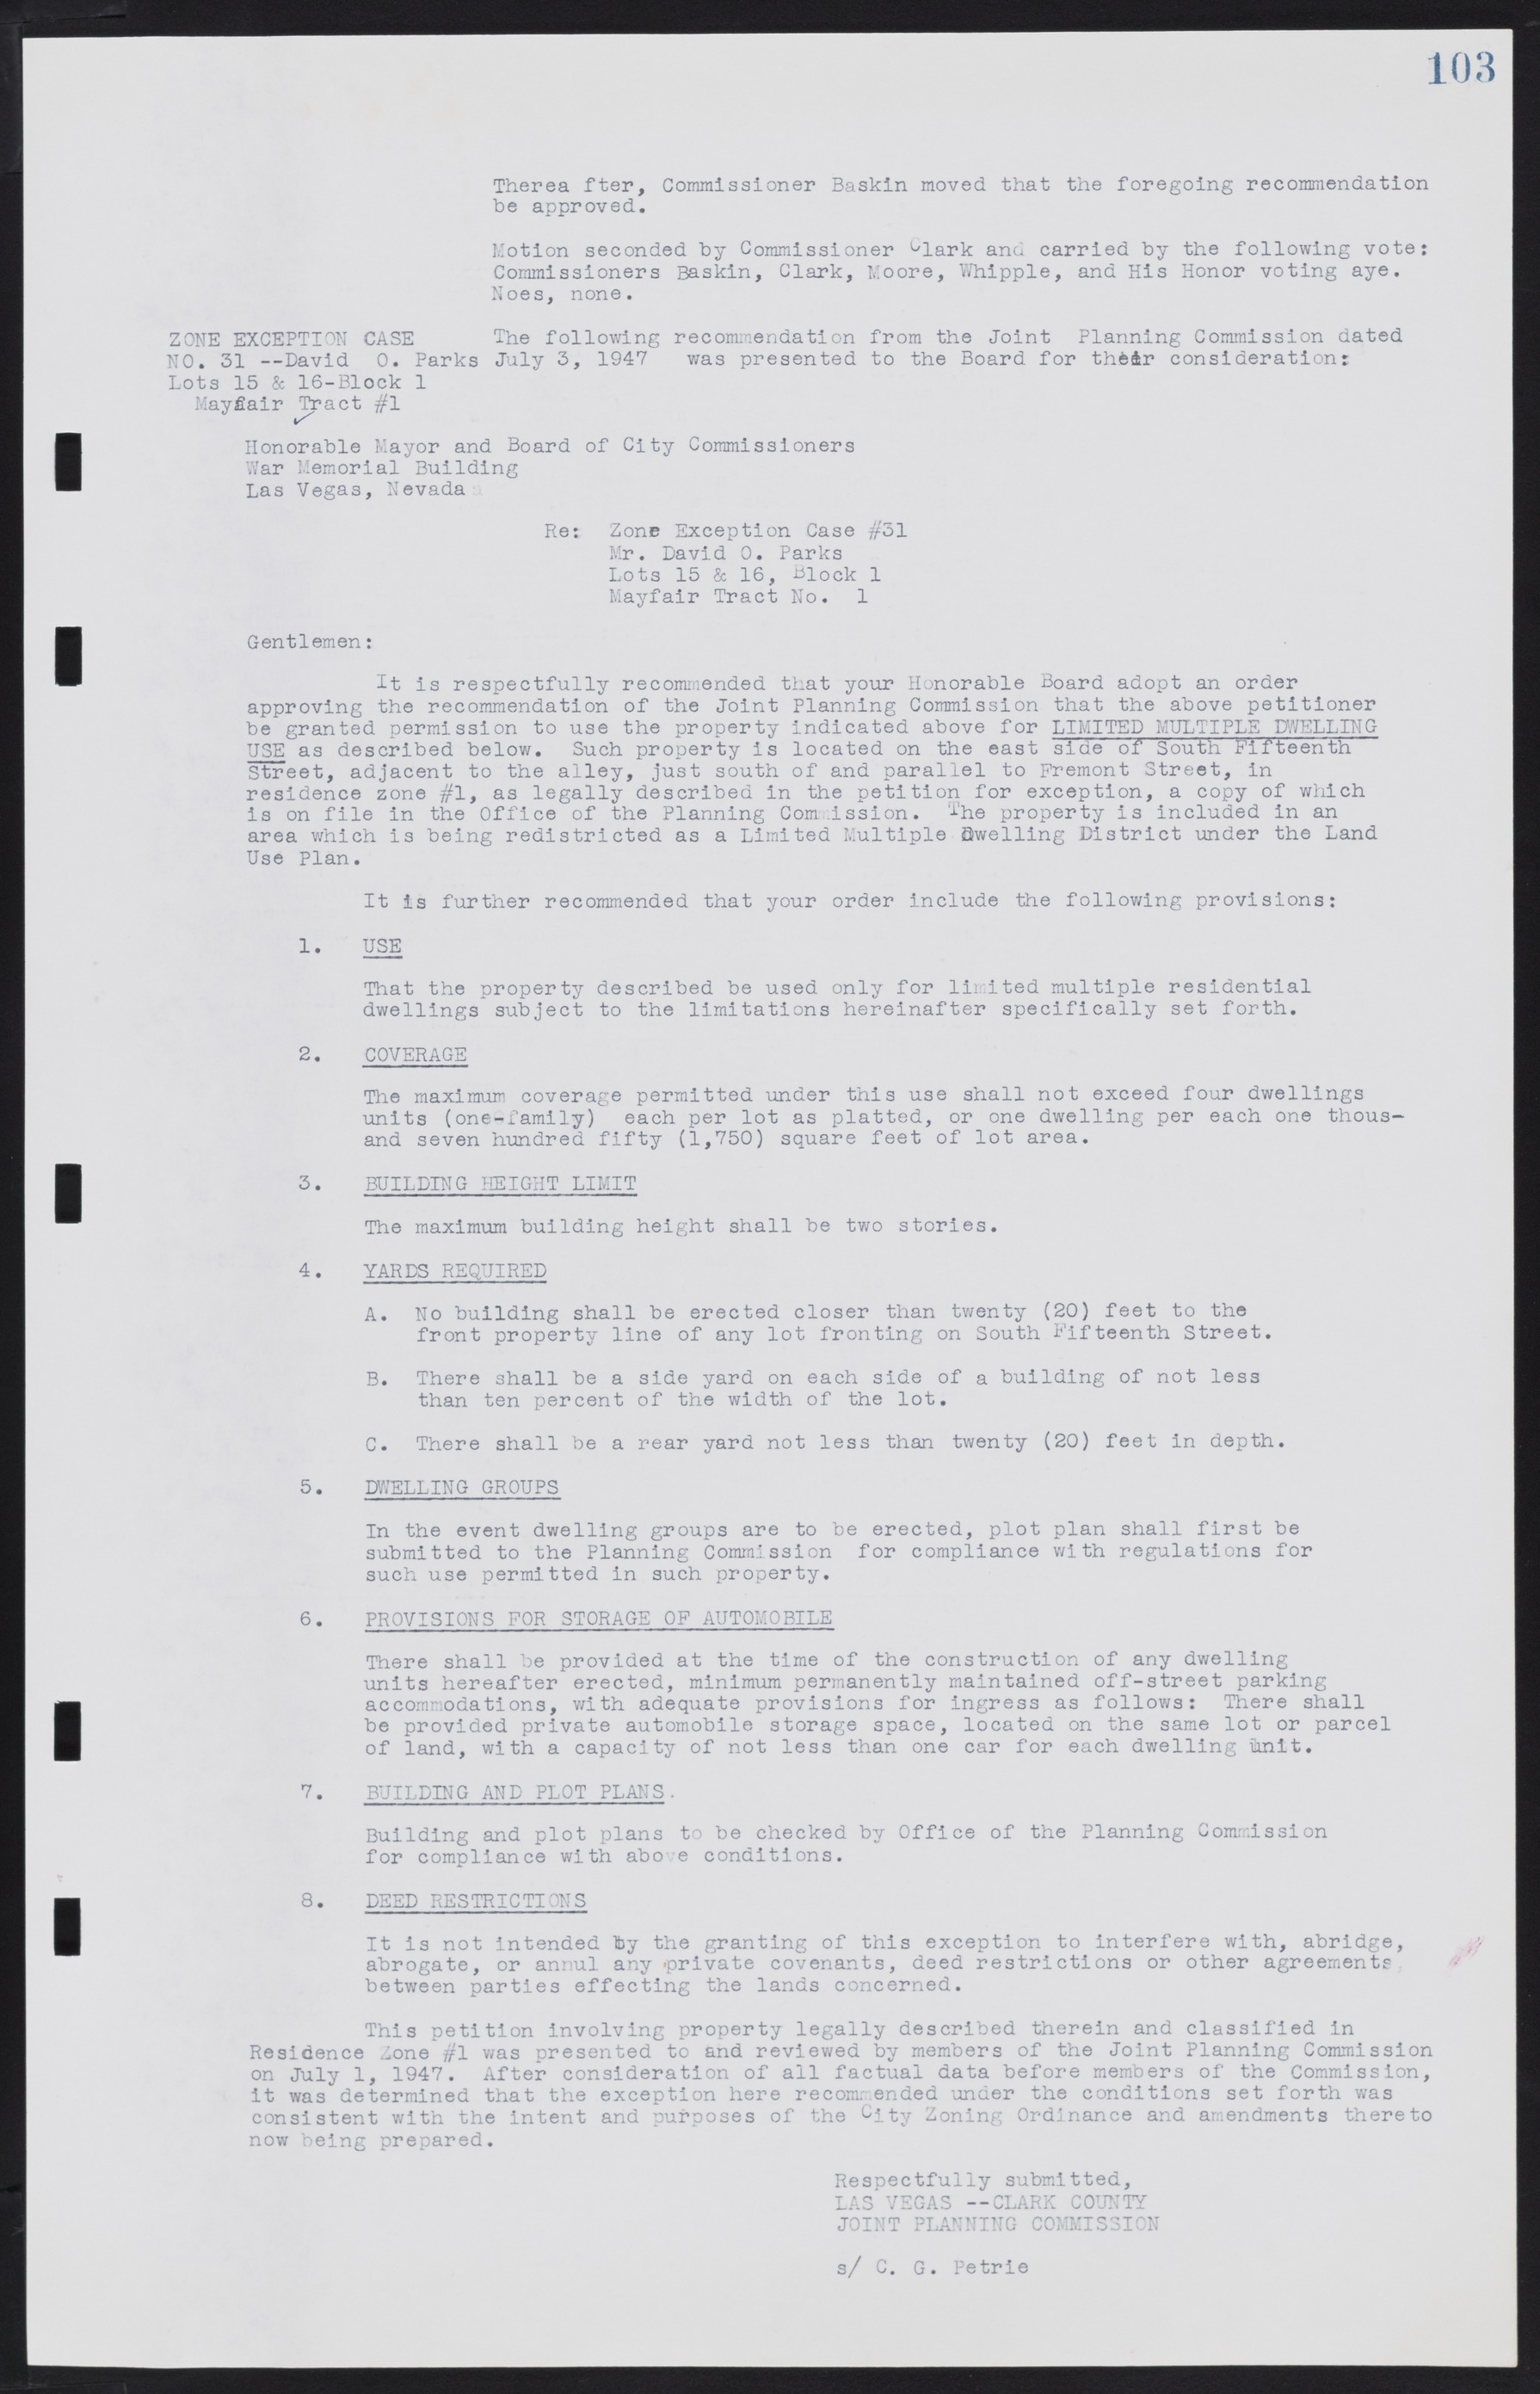 Las Vegas City Commission Minutes, January 7, 1947 to October 26, 1949, lvc000006-121